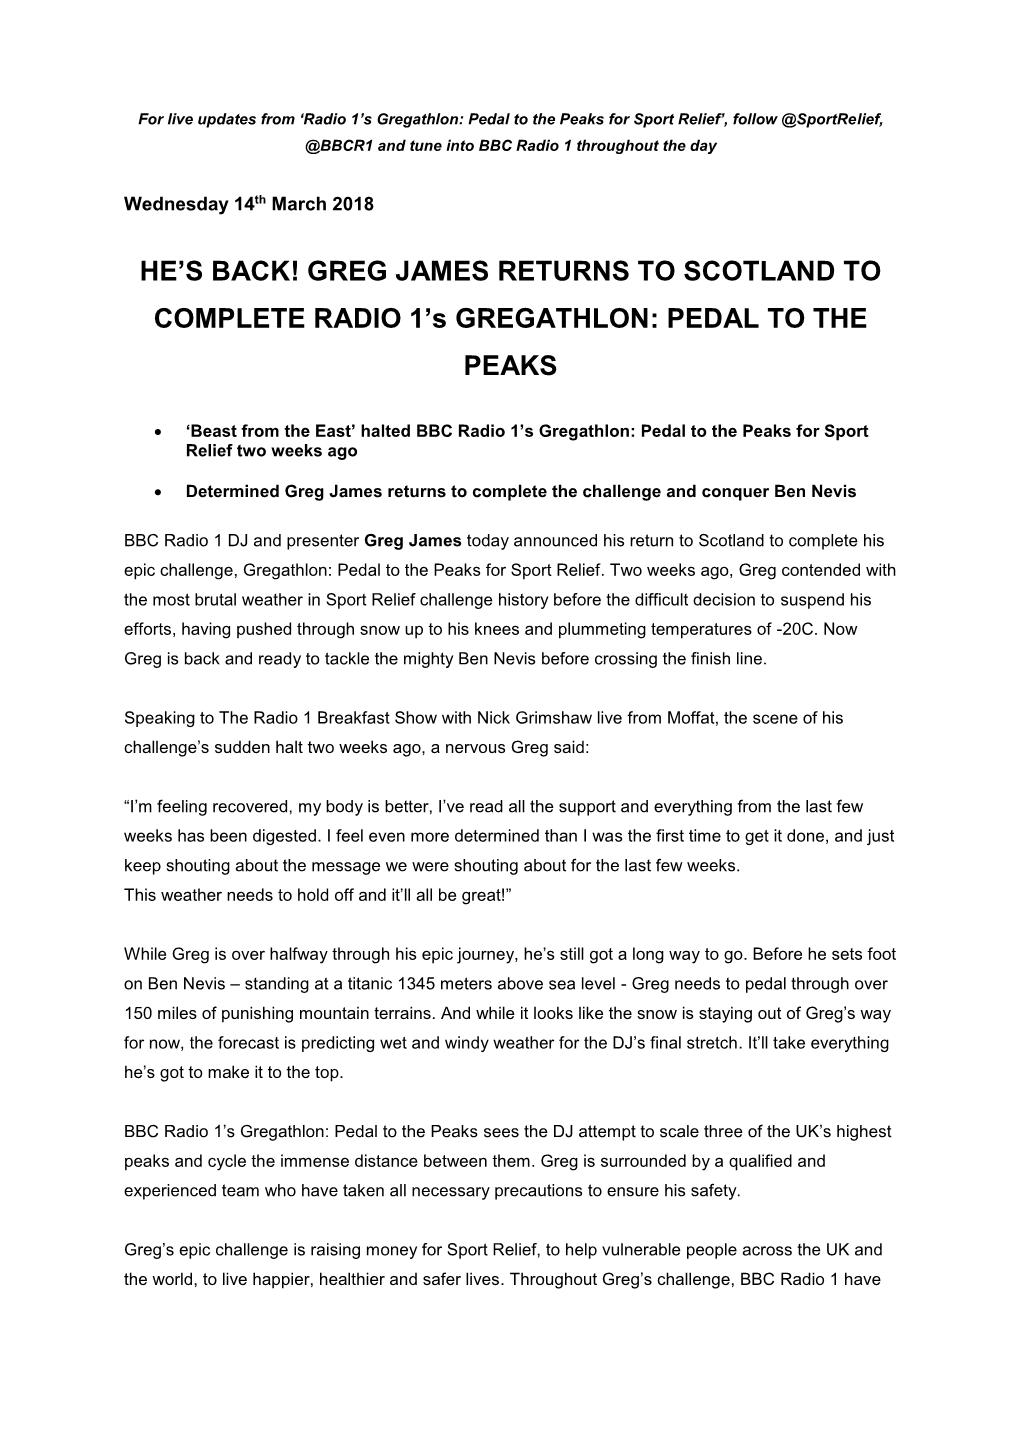 GREG JAMES RETURNS to SCOTLAND to COMPLETE RADIO 1'S GREGATHLON